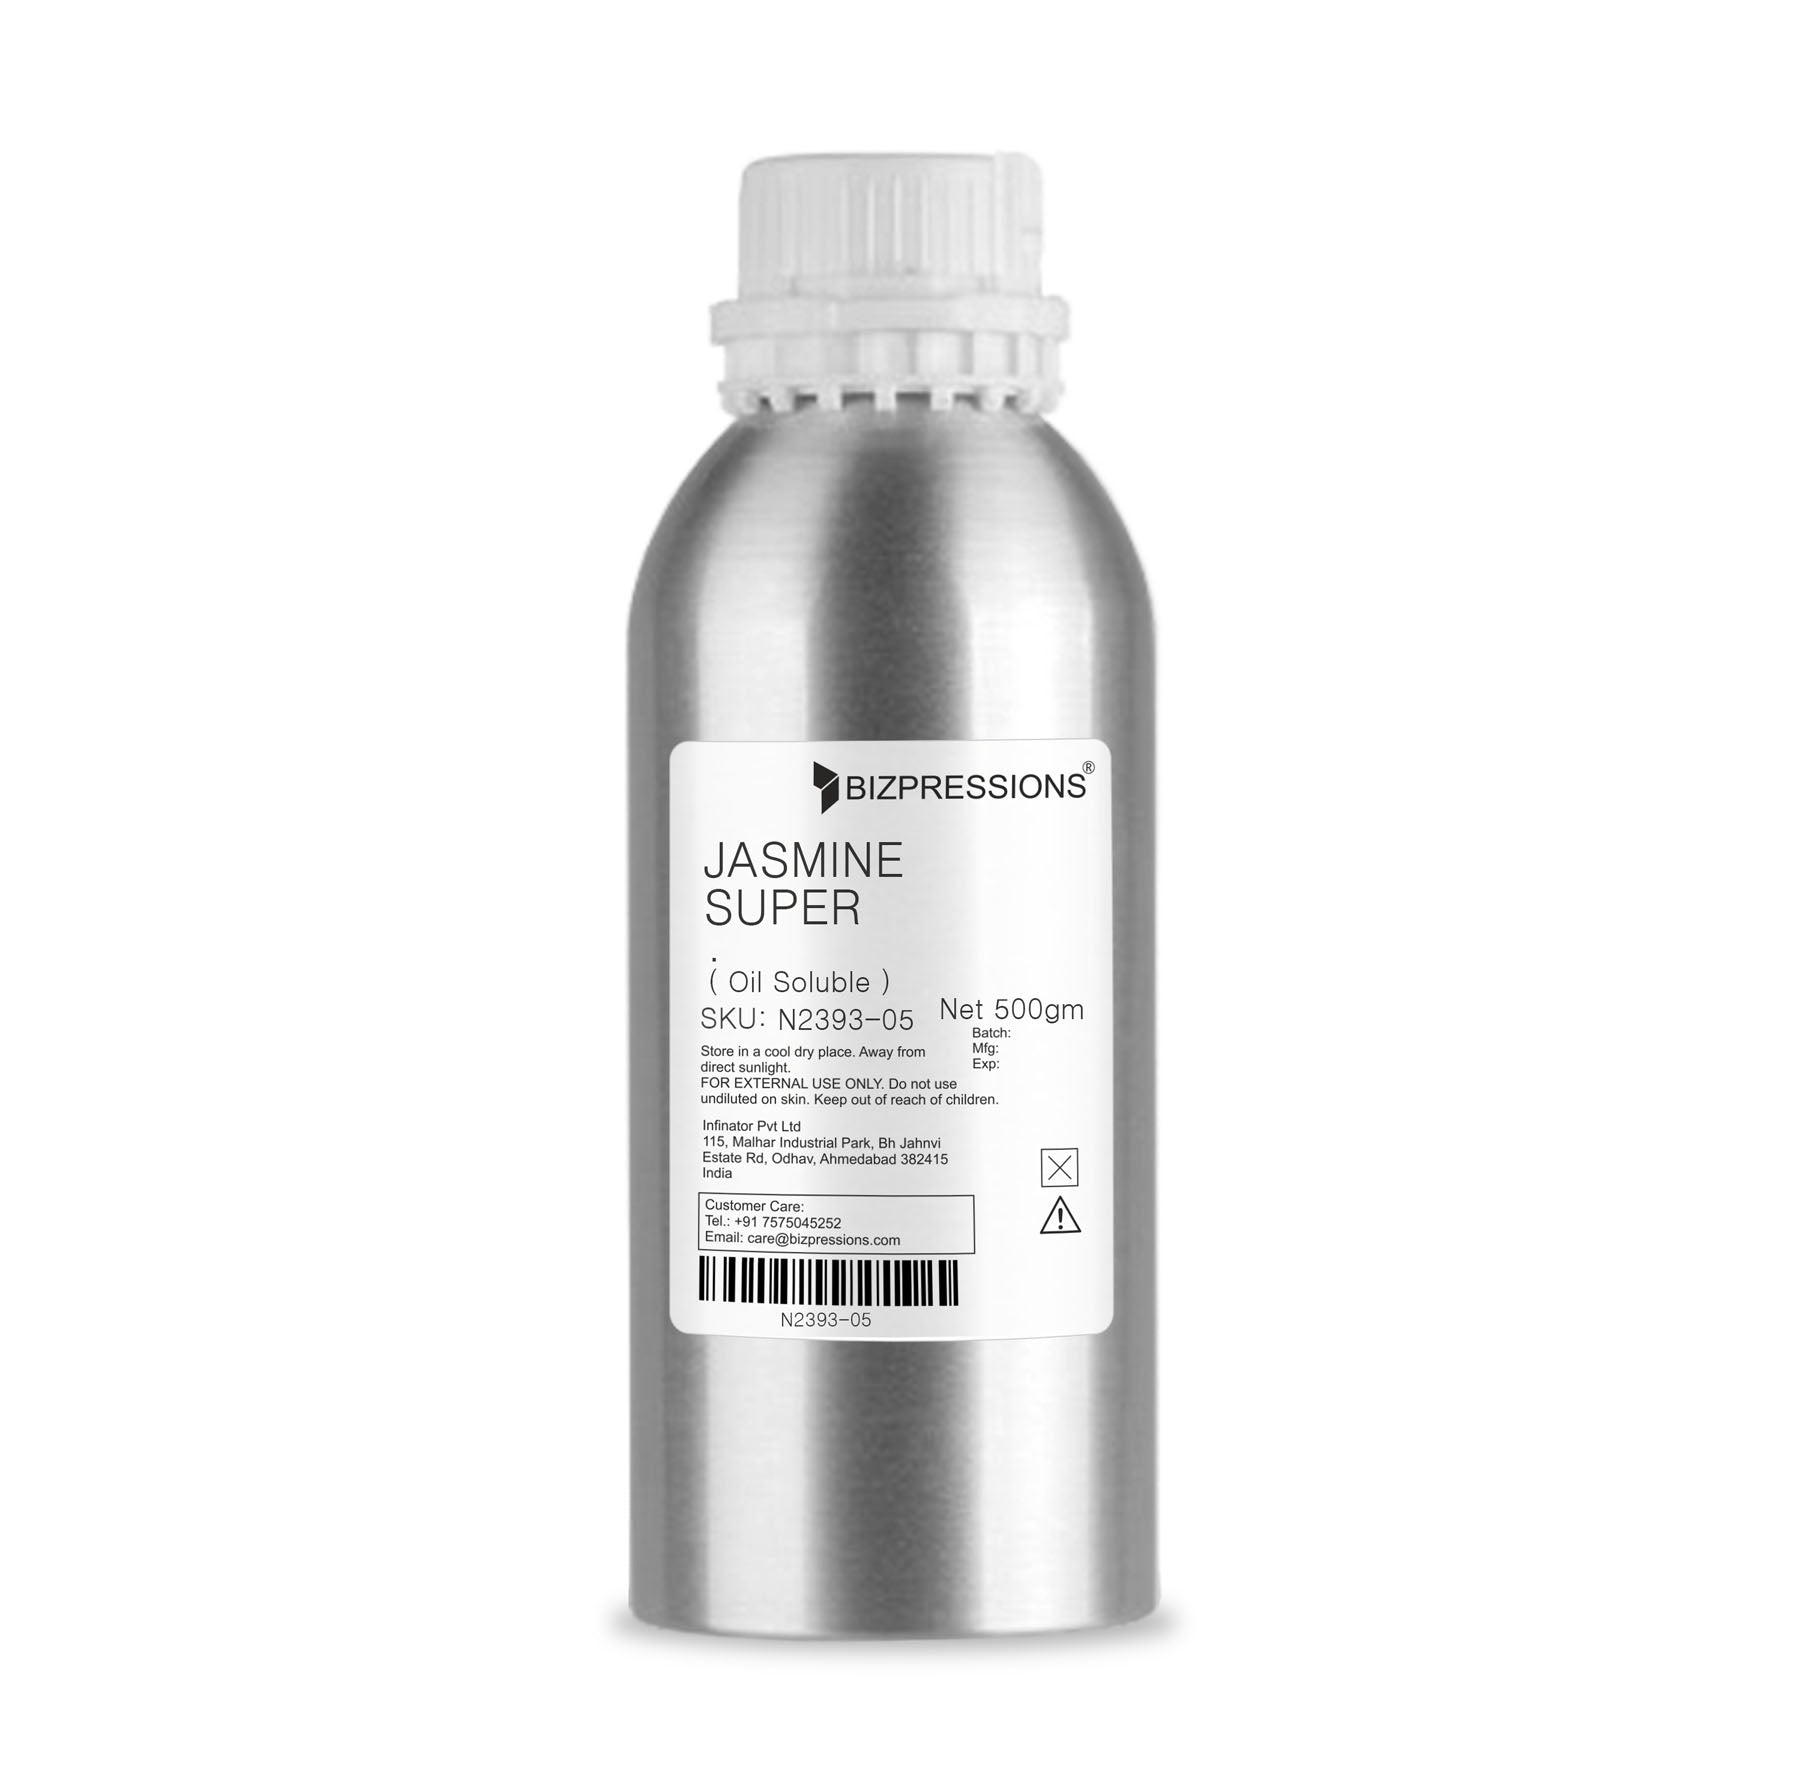 JASMINE SUPER - Fragrance ( Oil Soluble ) - 500 gm